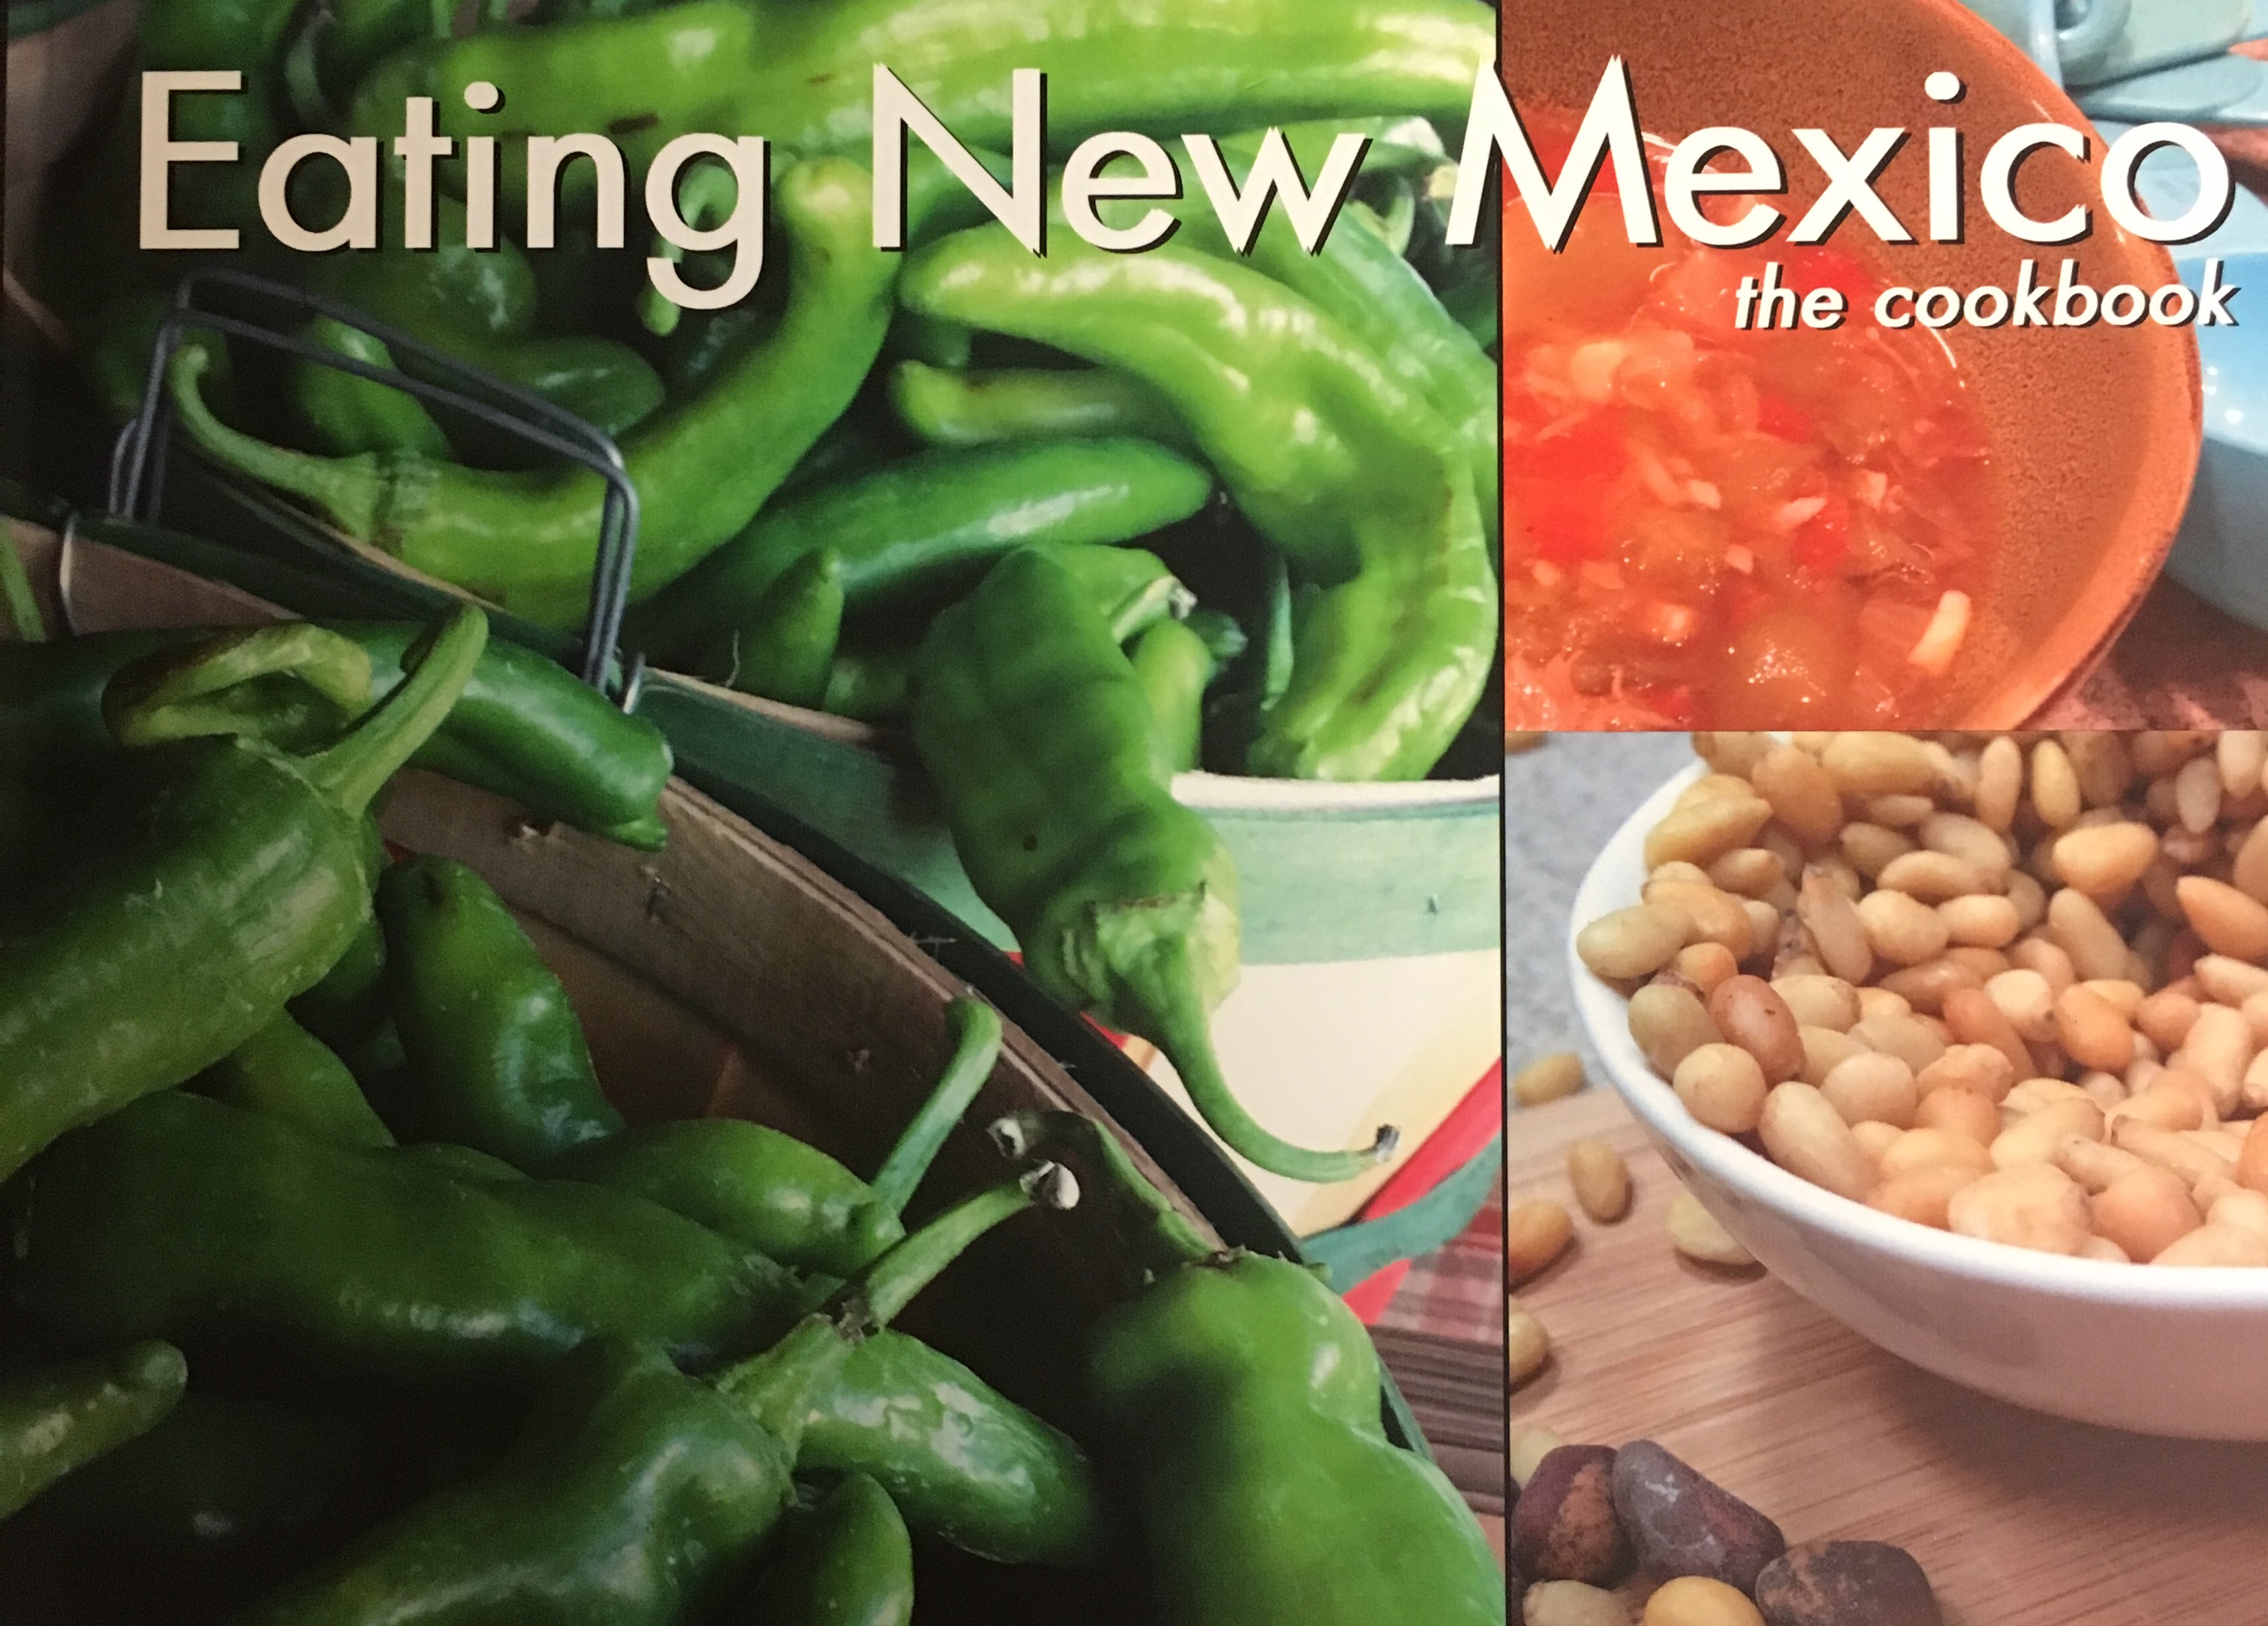 New Mexico Cookbook